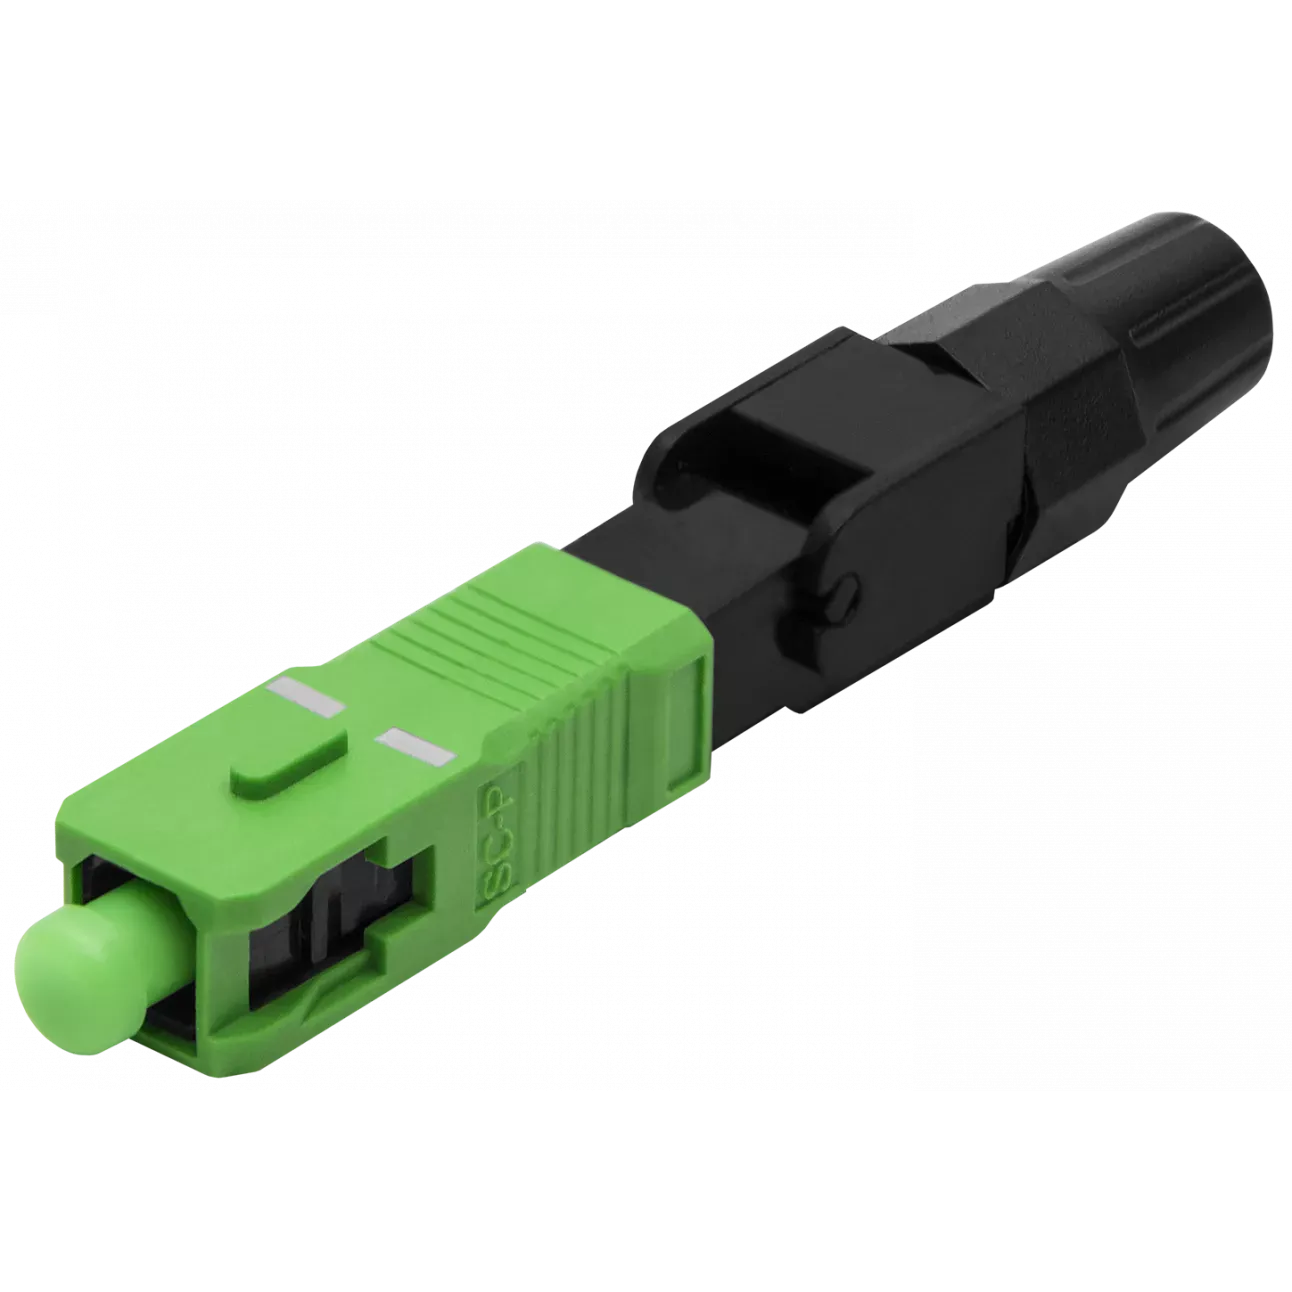 Быстрый коннектор типа SC/APC для FTTH кабелей#1